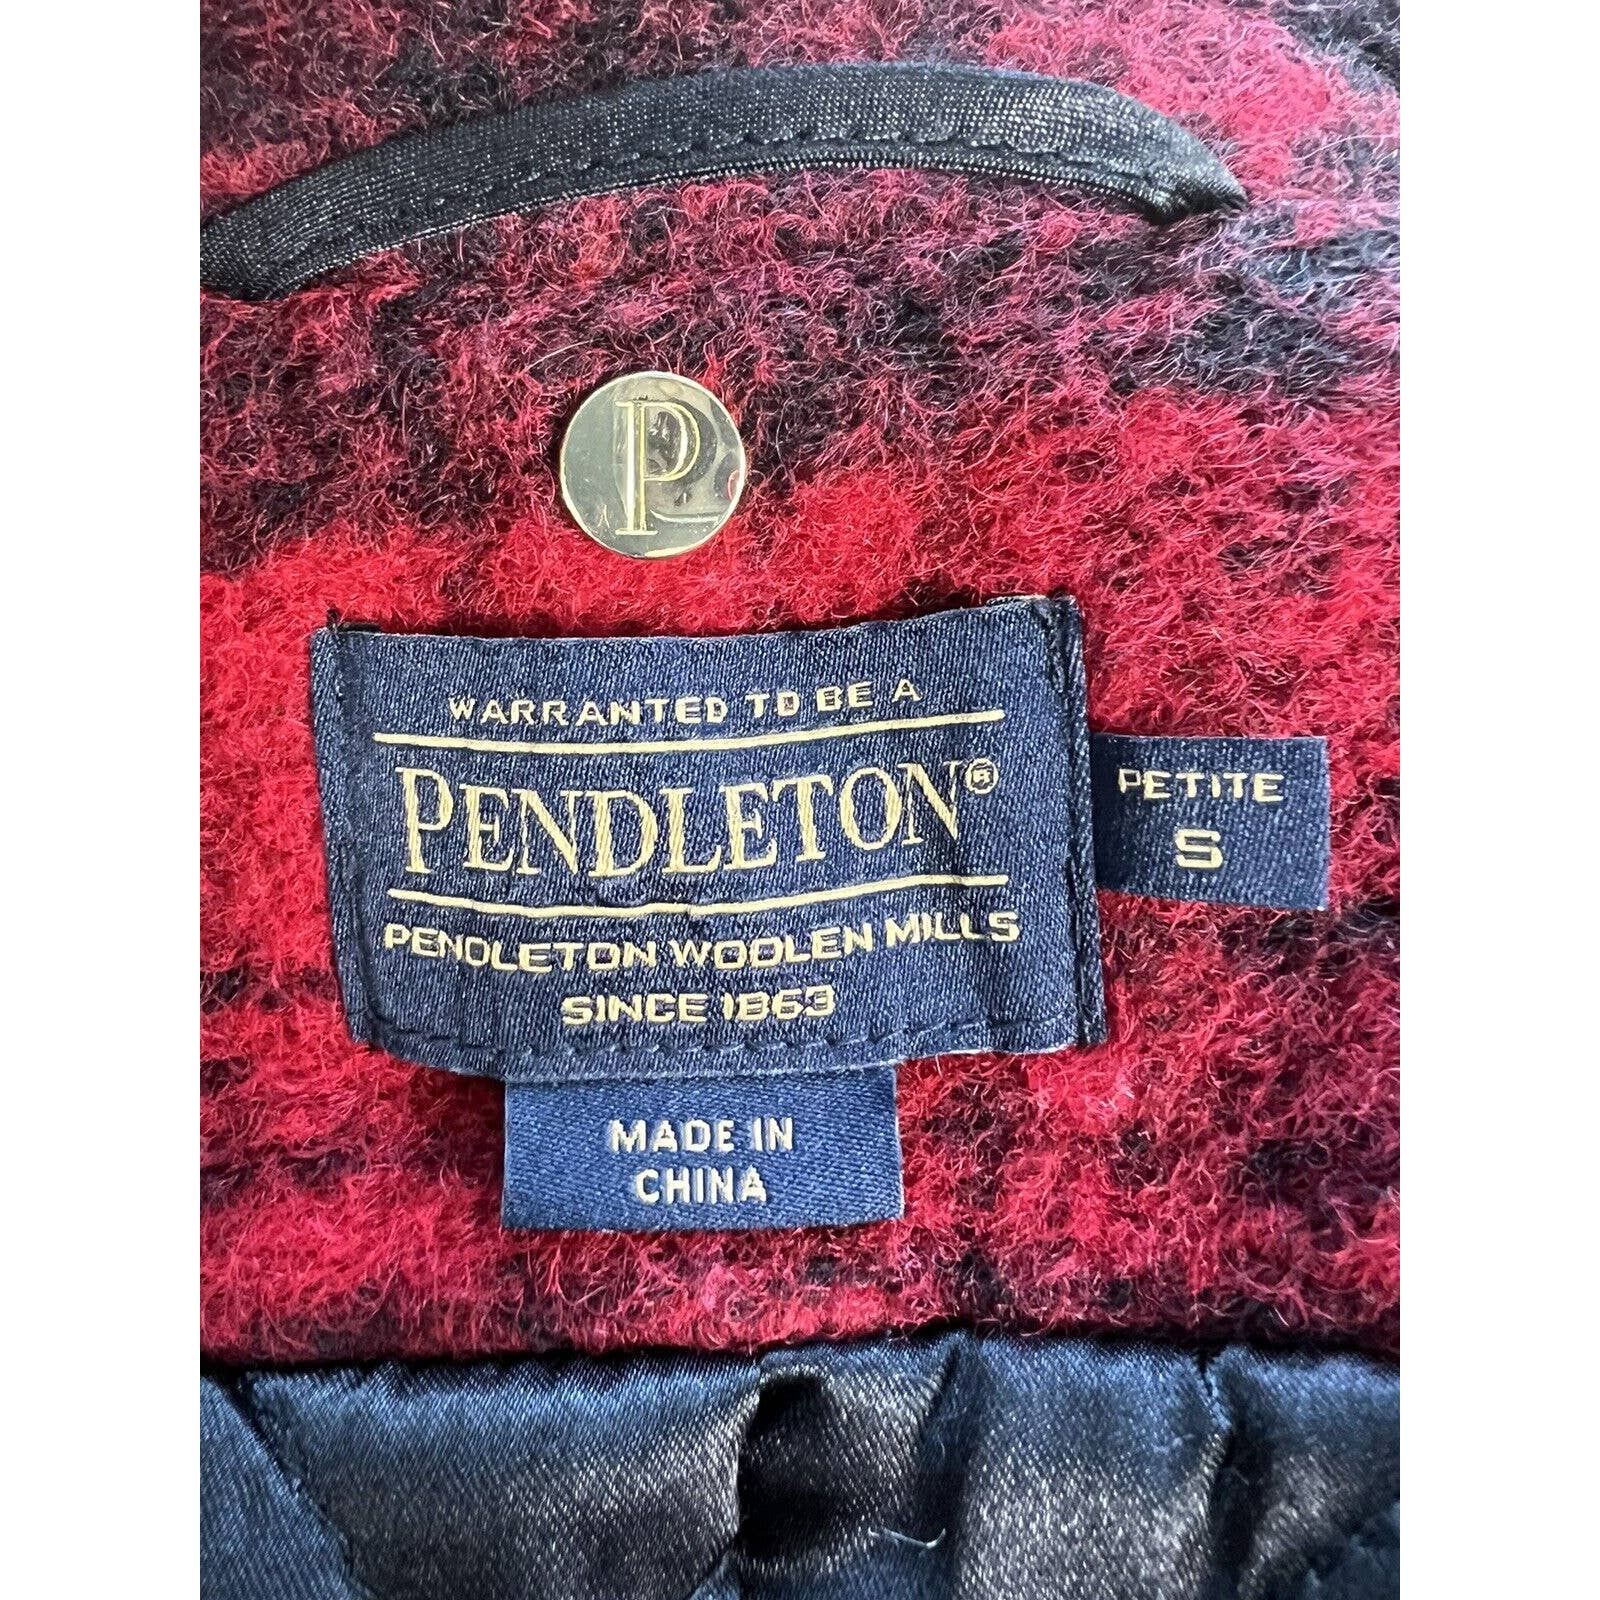 Pendleton Overcoat Women’s Petite Small Wool Blend Red Buffalo Plaid Jacket